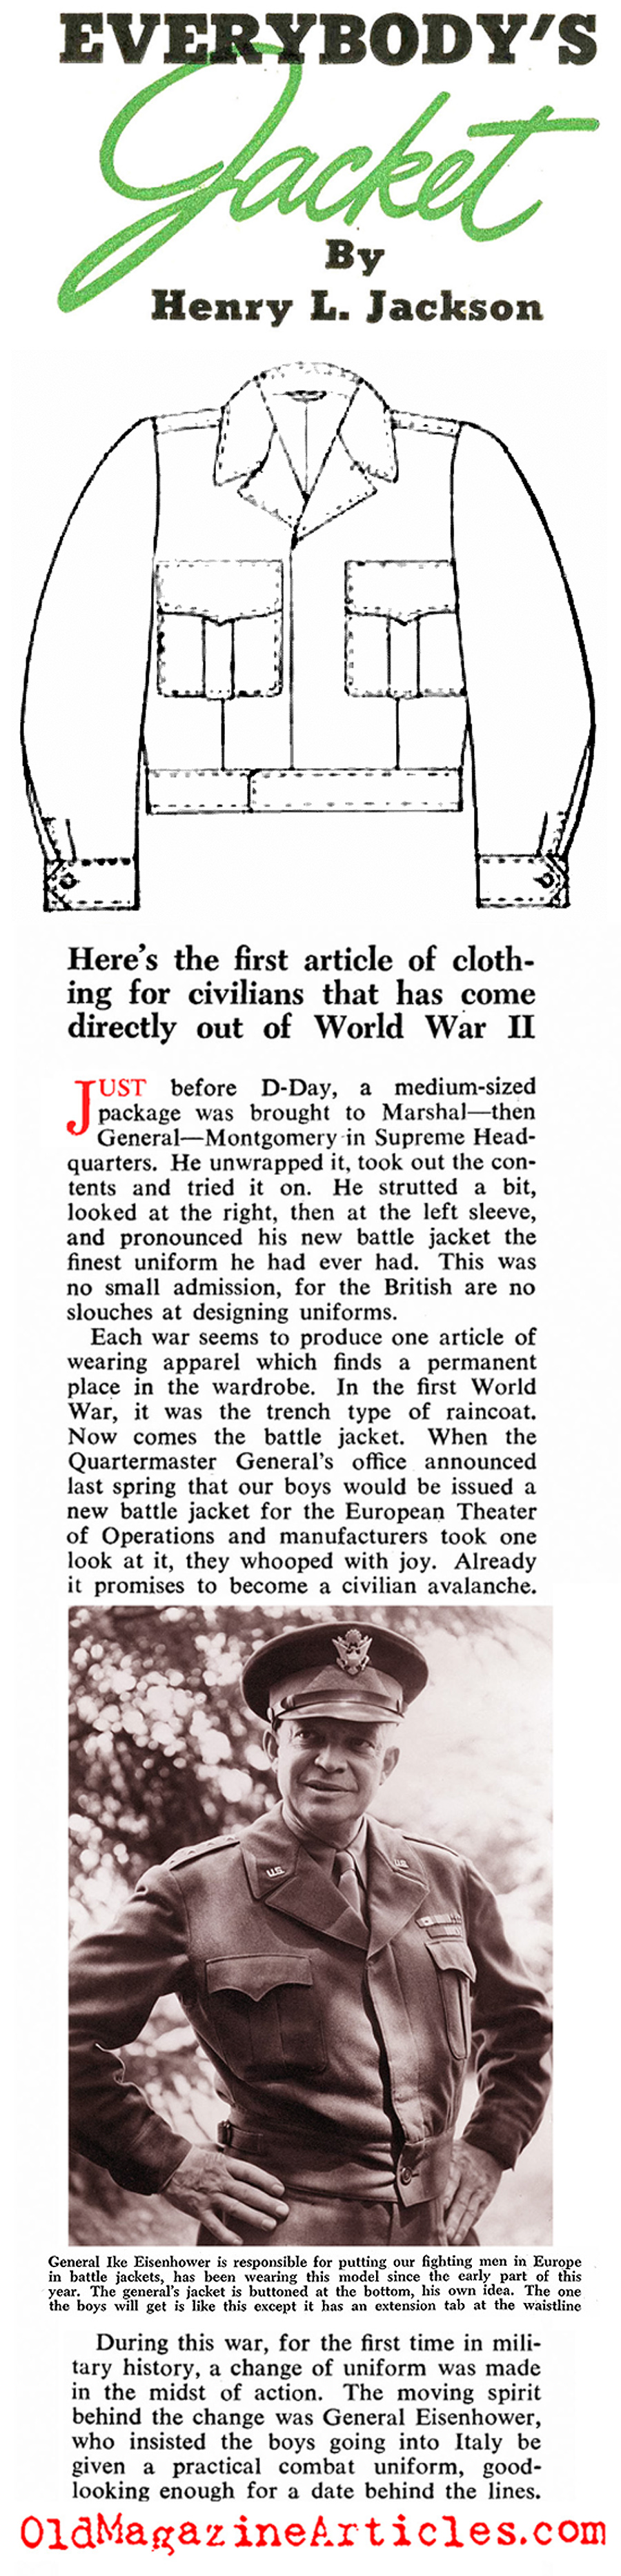 The Ike Jacket Goes Mainstream (Collier's Magazine, 1944)